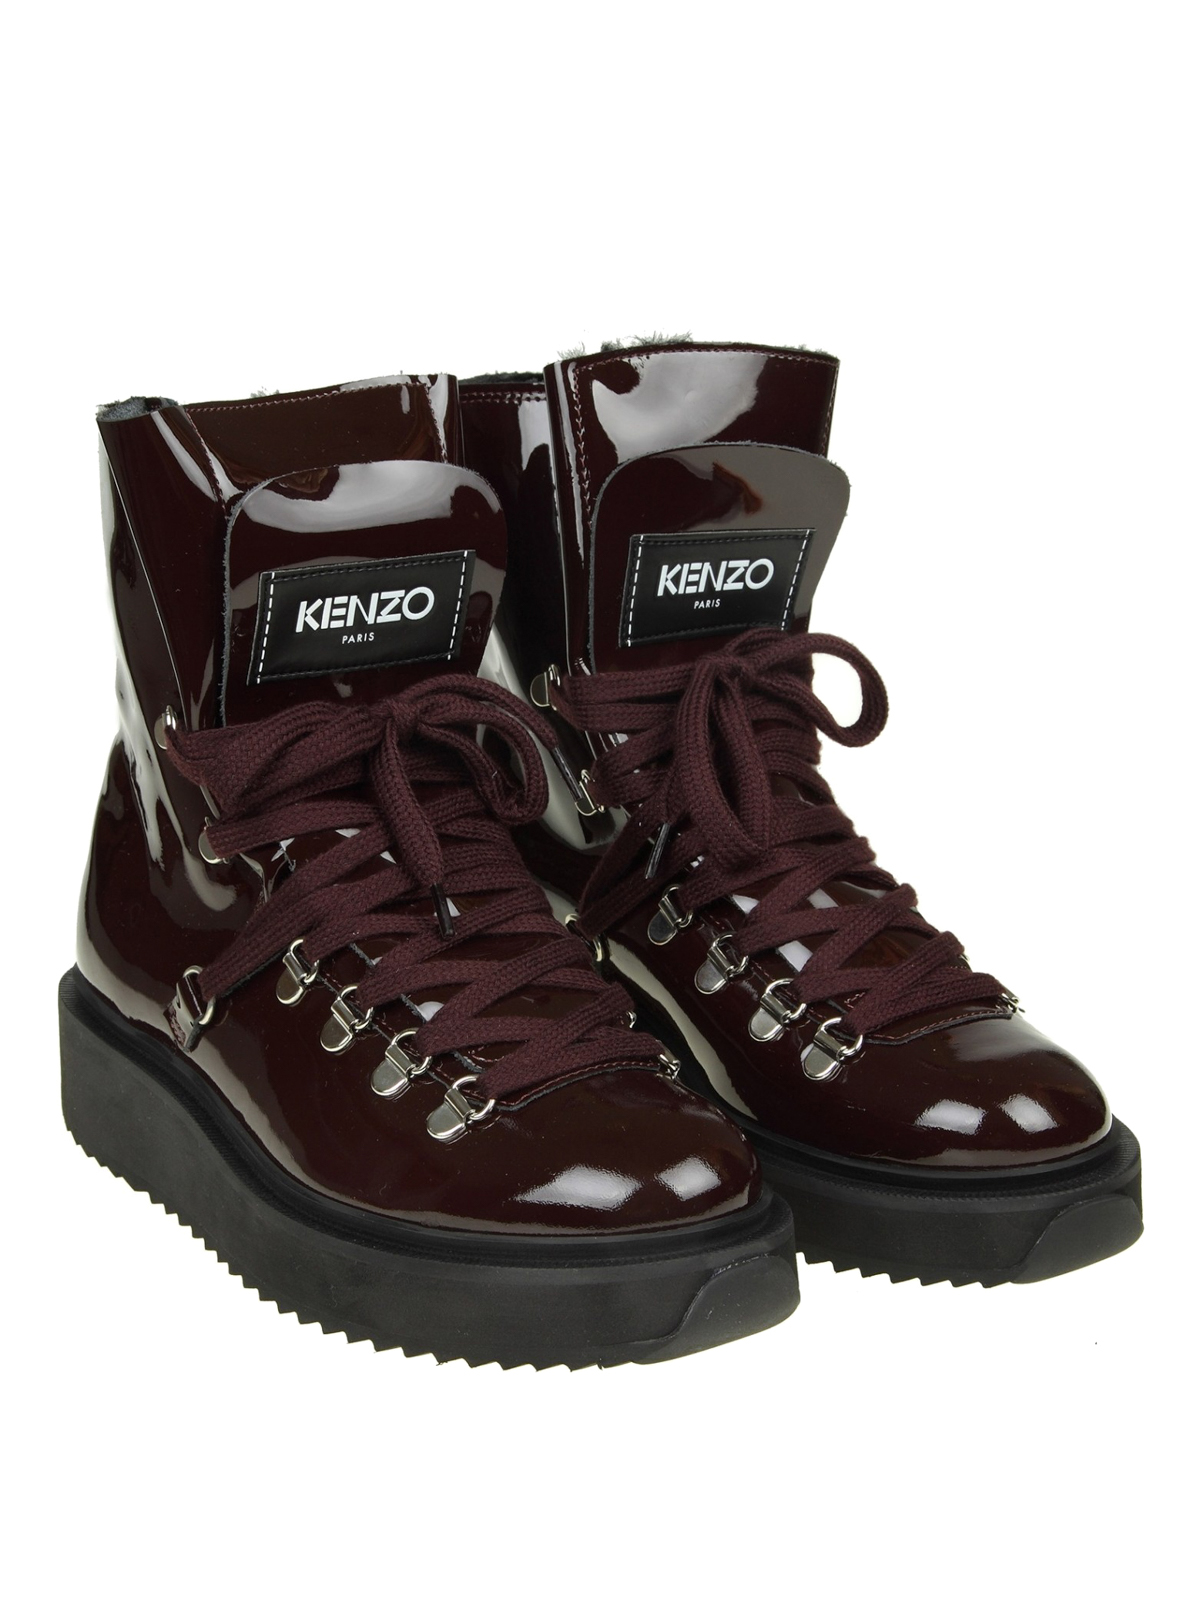 kenzo alaska boots